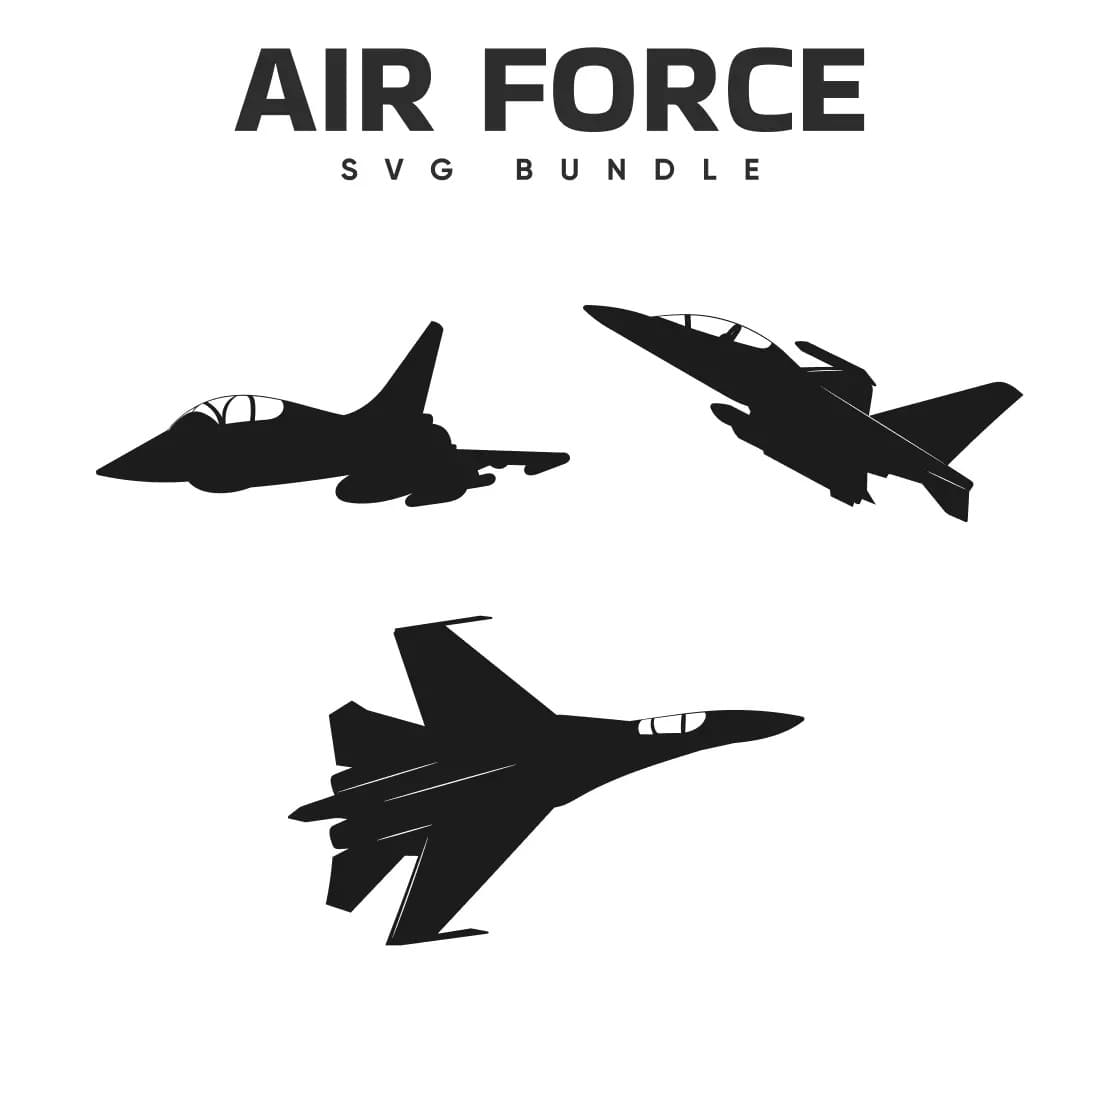 Air Force SVG Bundle Preview.